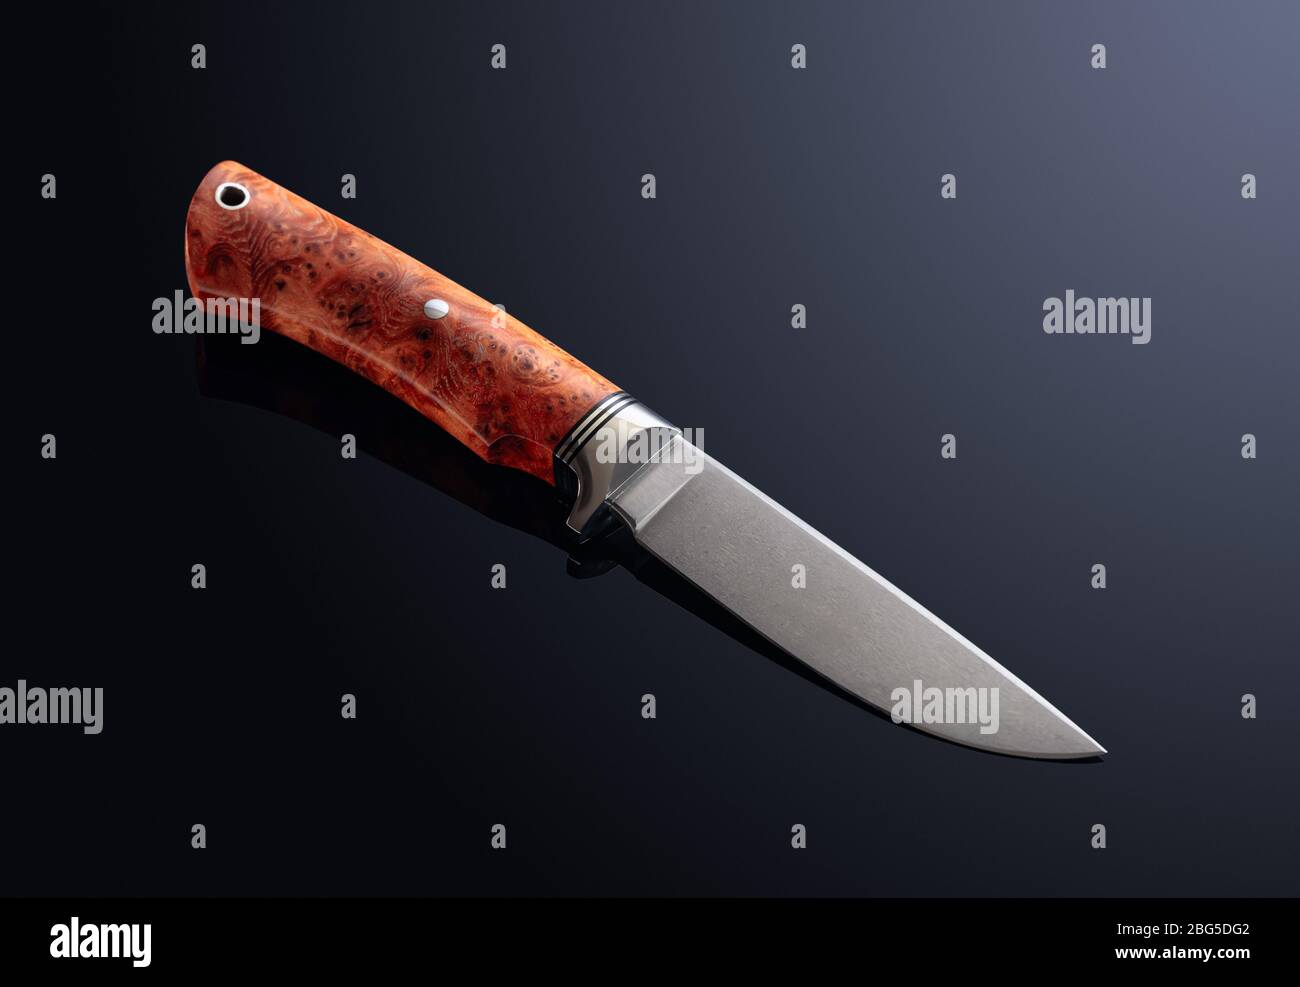 https://c8.alamy.com/comp/2BG5DG2/hunter-combat-hand-made-knife-on-dark-background-the-blade-has-a-beautiful-damask-pattern-handle-titan-and-elm-saved-clipping-path-2BG5DG2.jpg